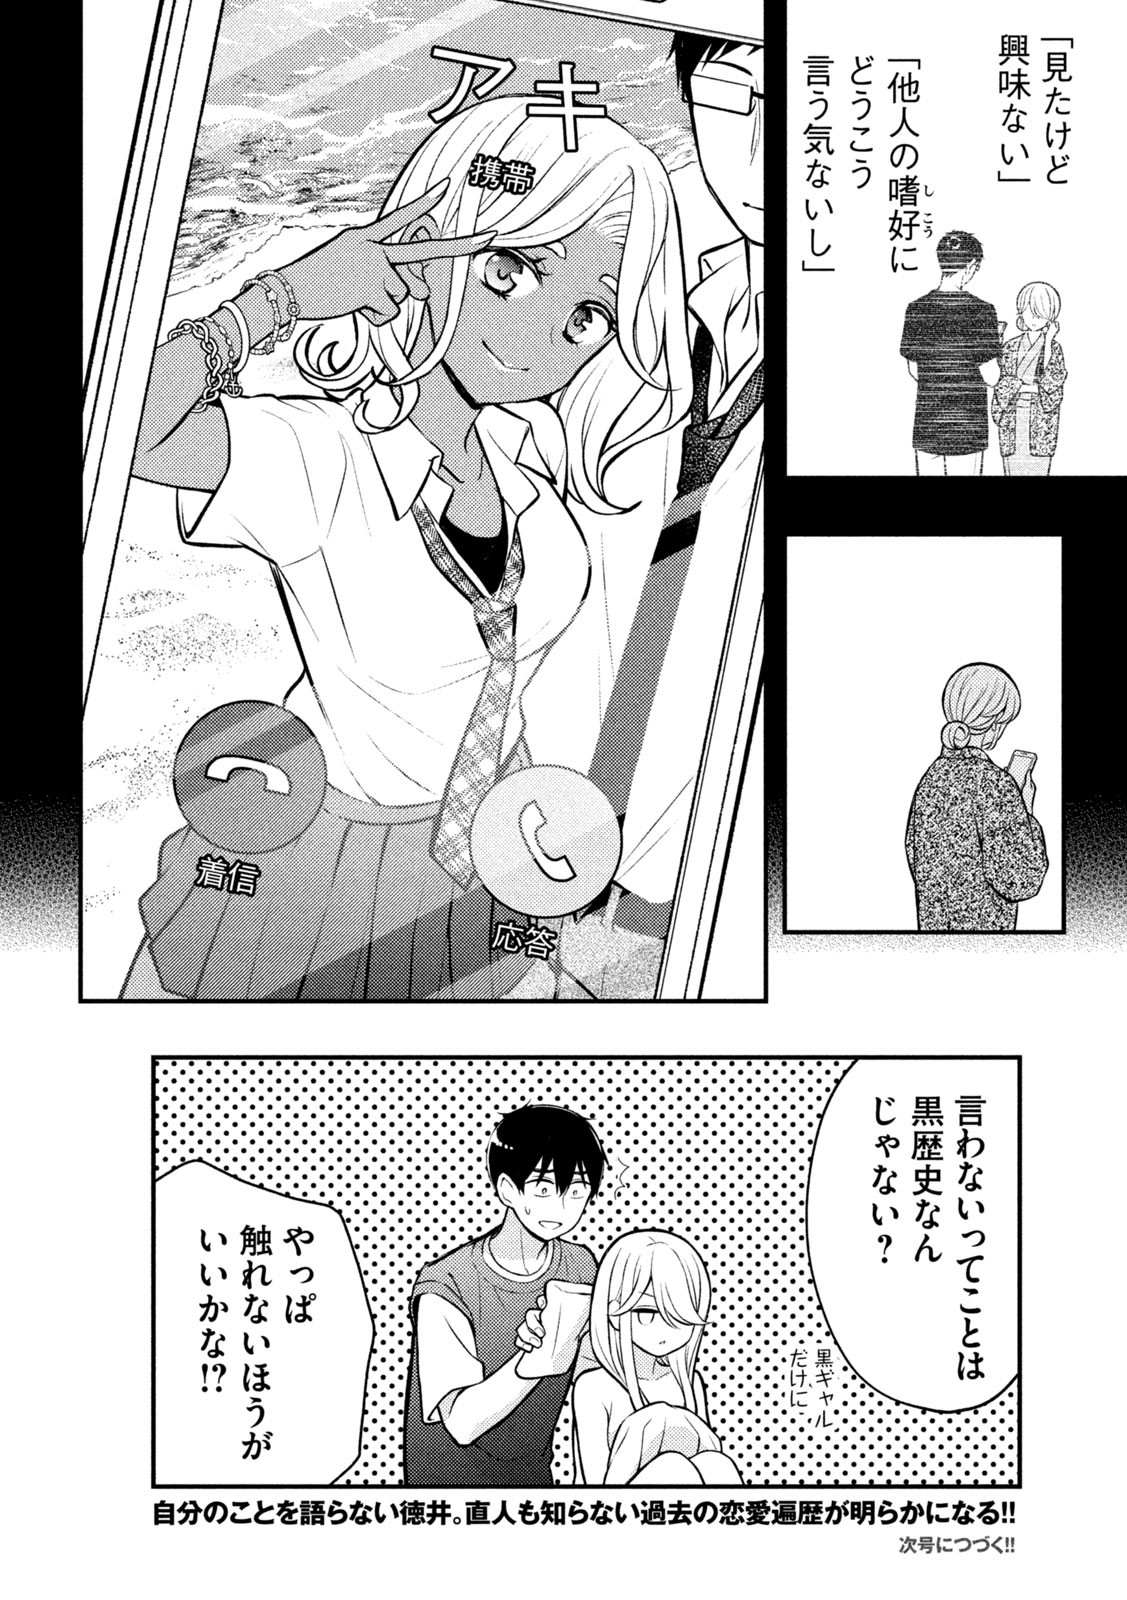 Watari-kun no xx ga Houkai Sunzen - Chapter 83 - Page 32